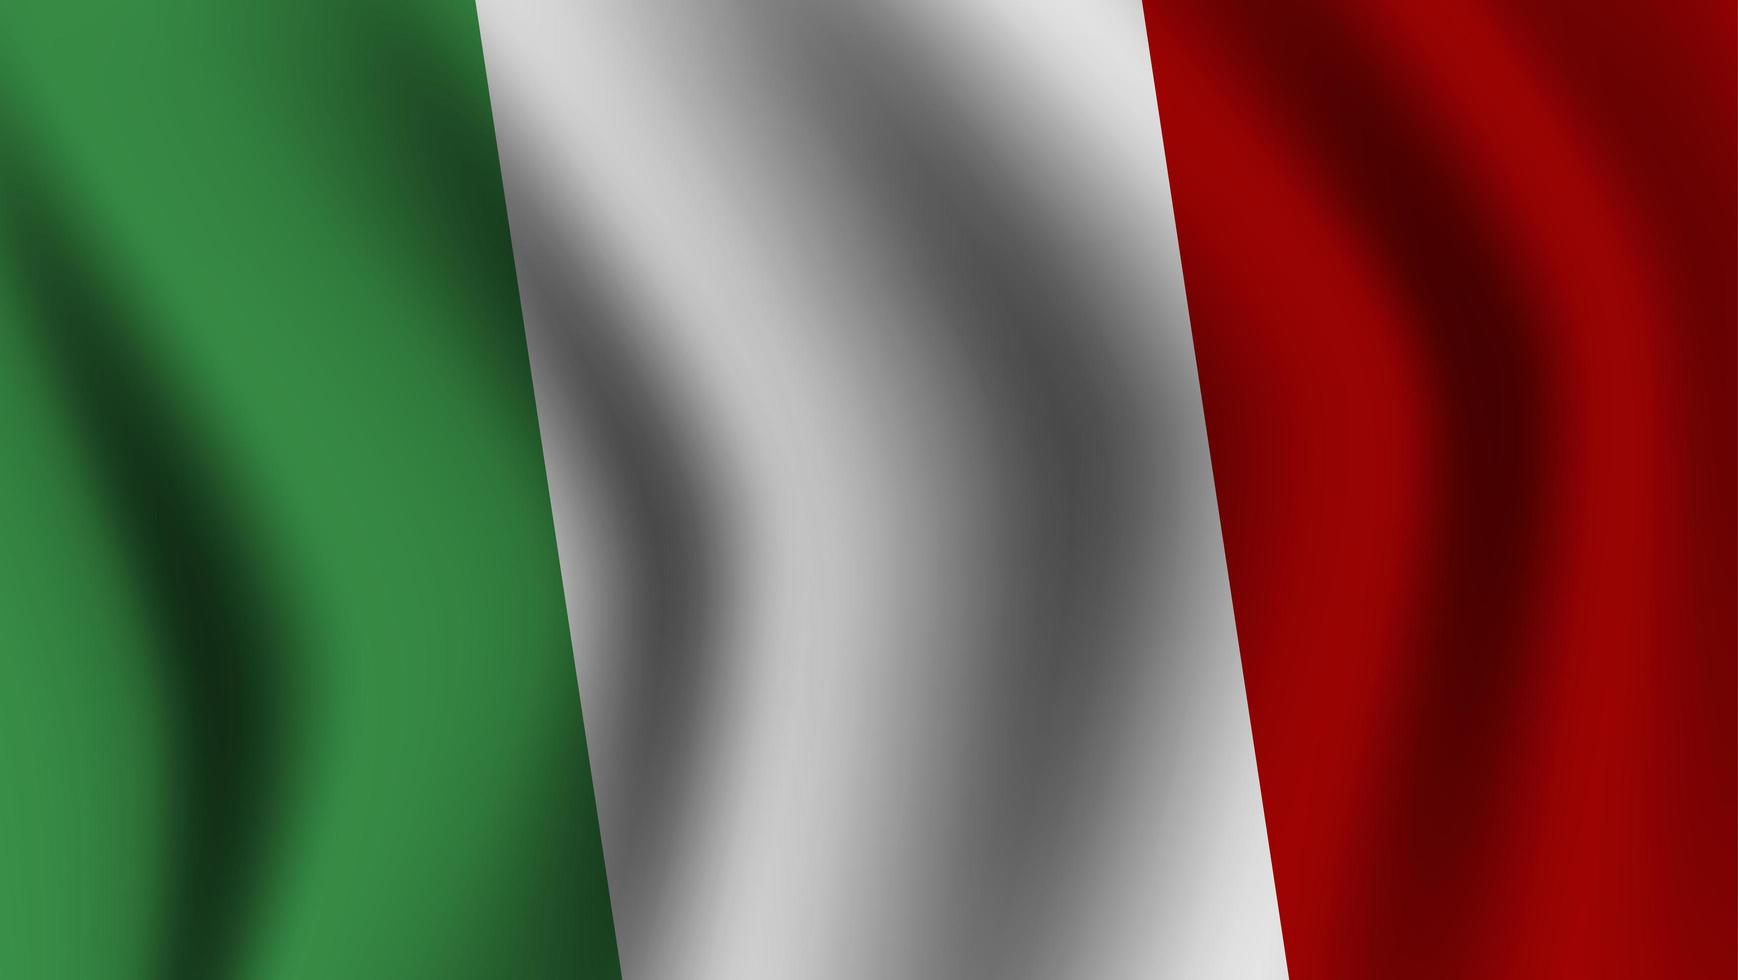 Realistic waving Italian flag vector